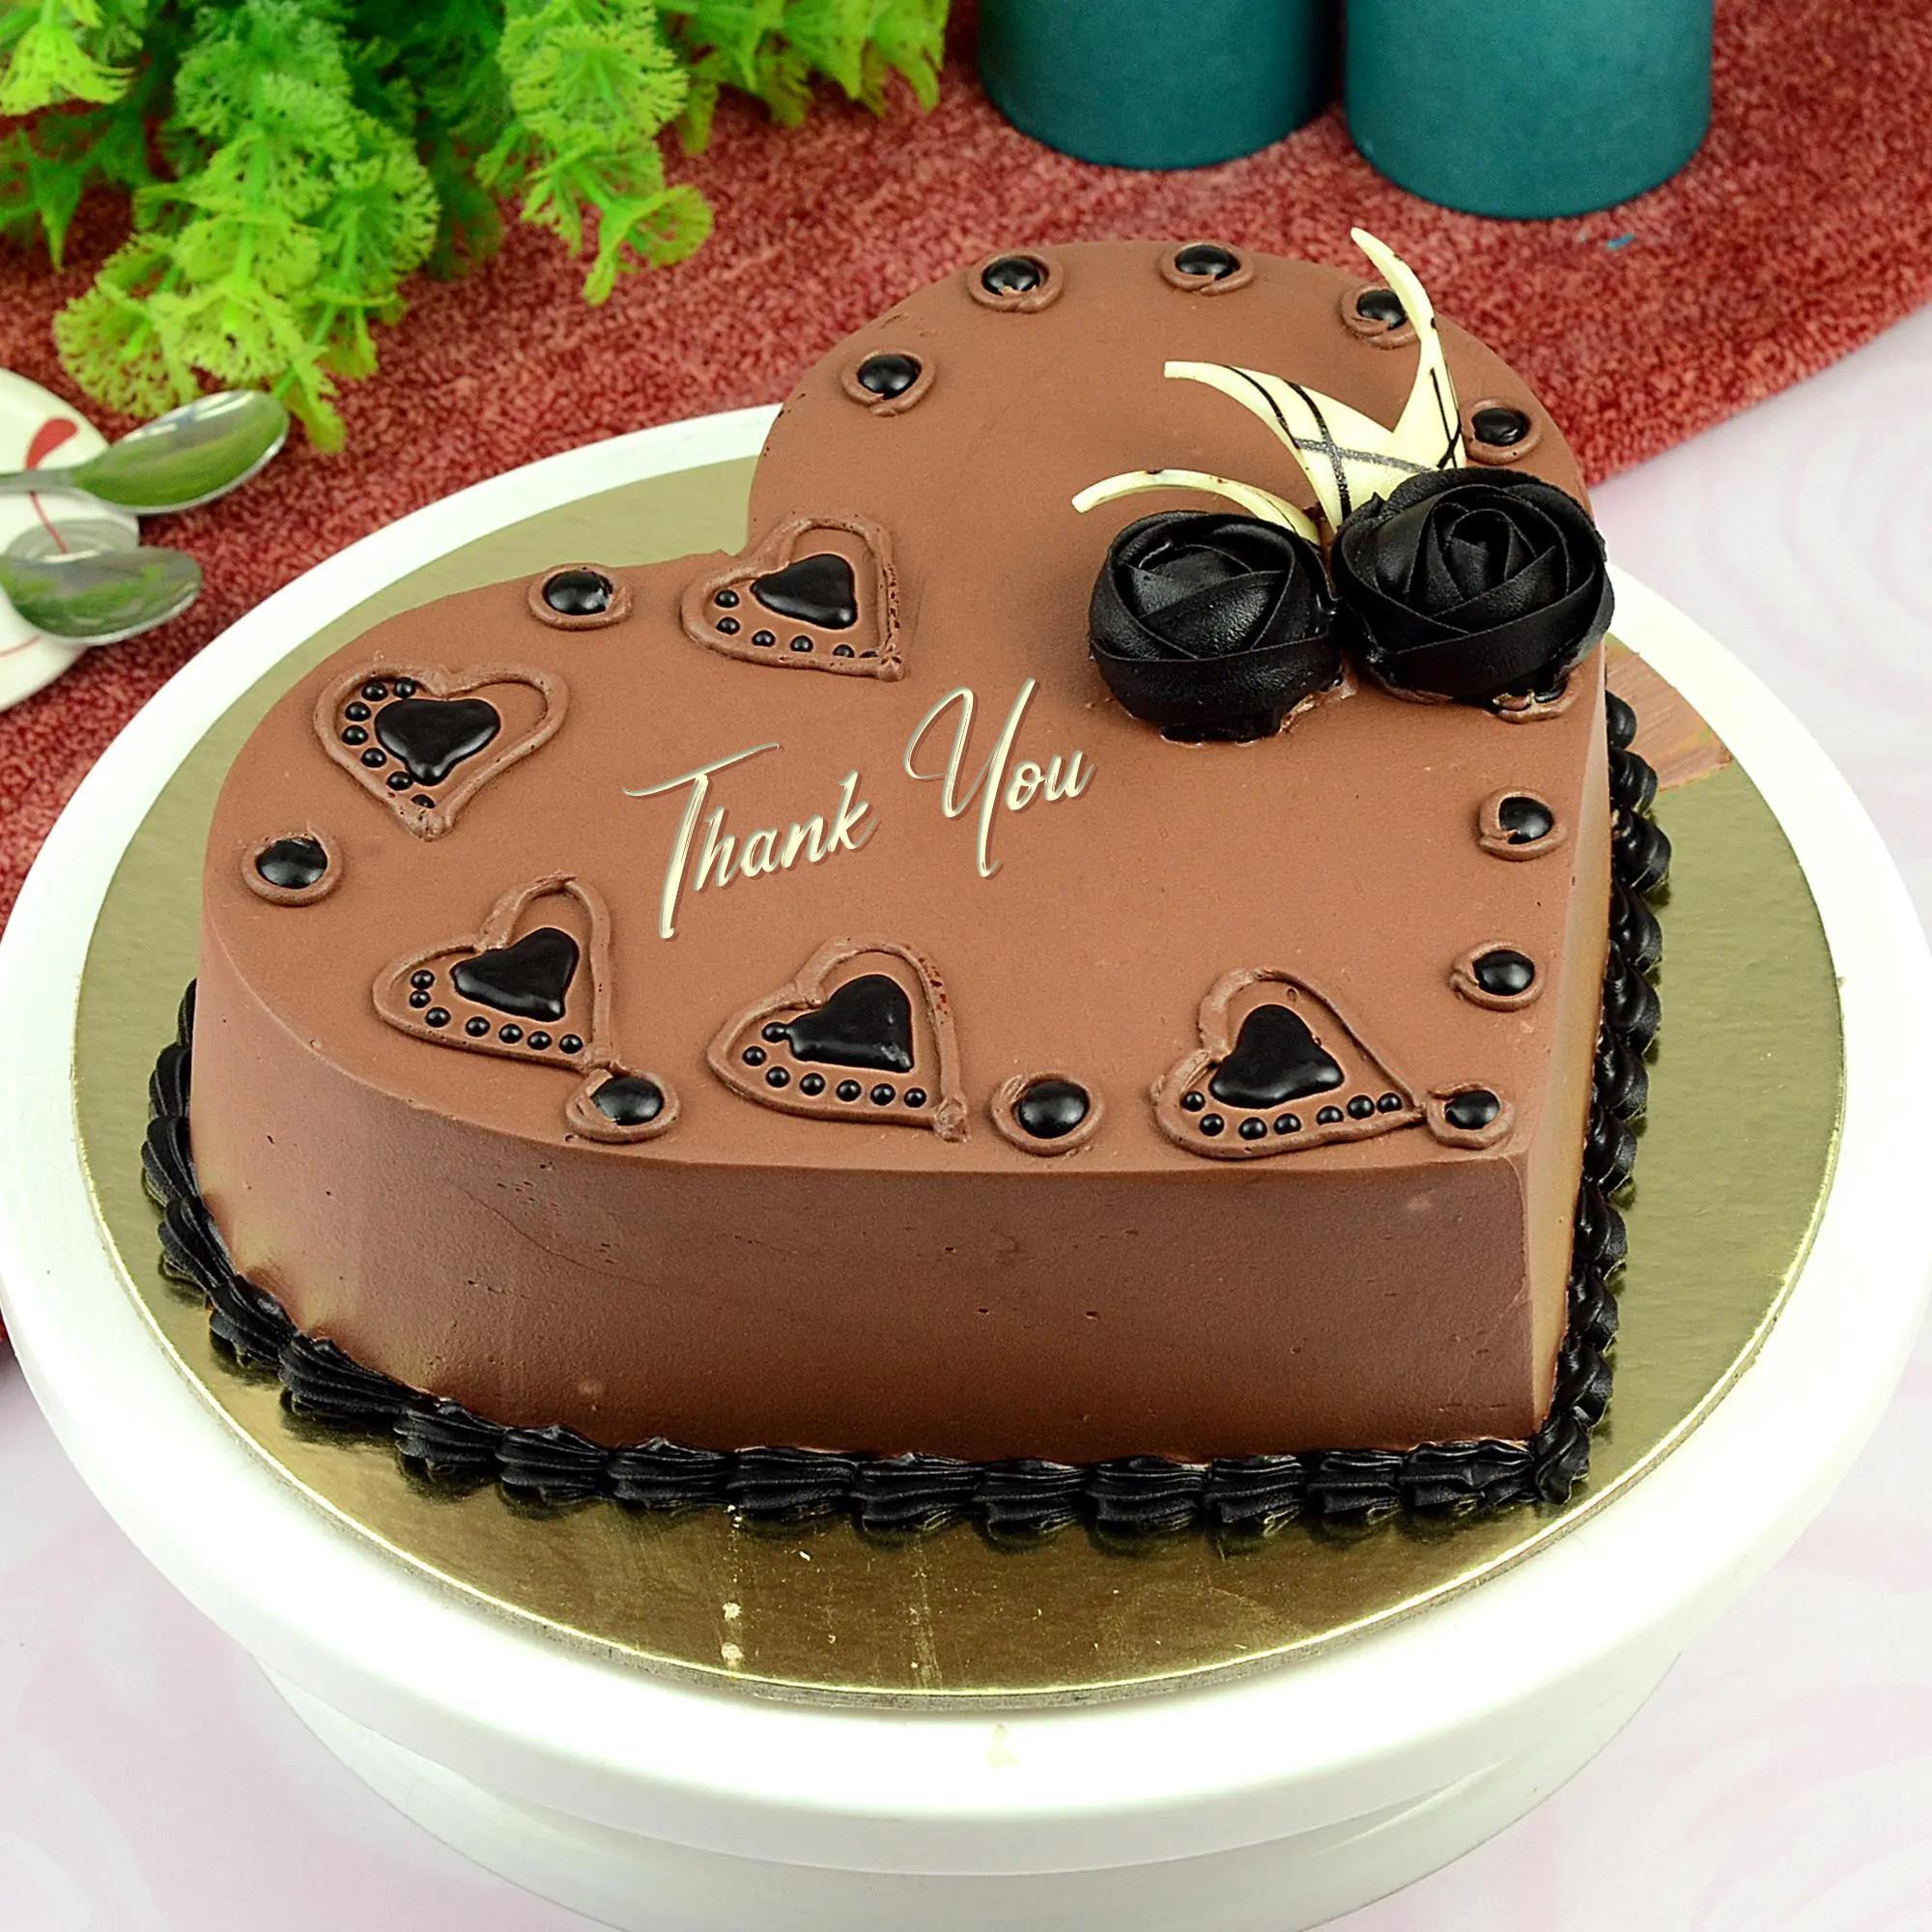 Thank You Cake 1 Kg - Chocolate